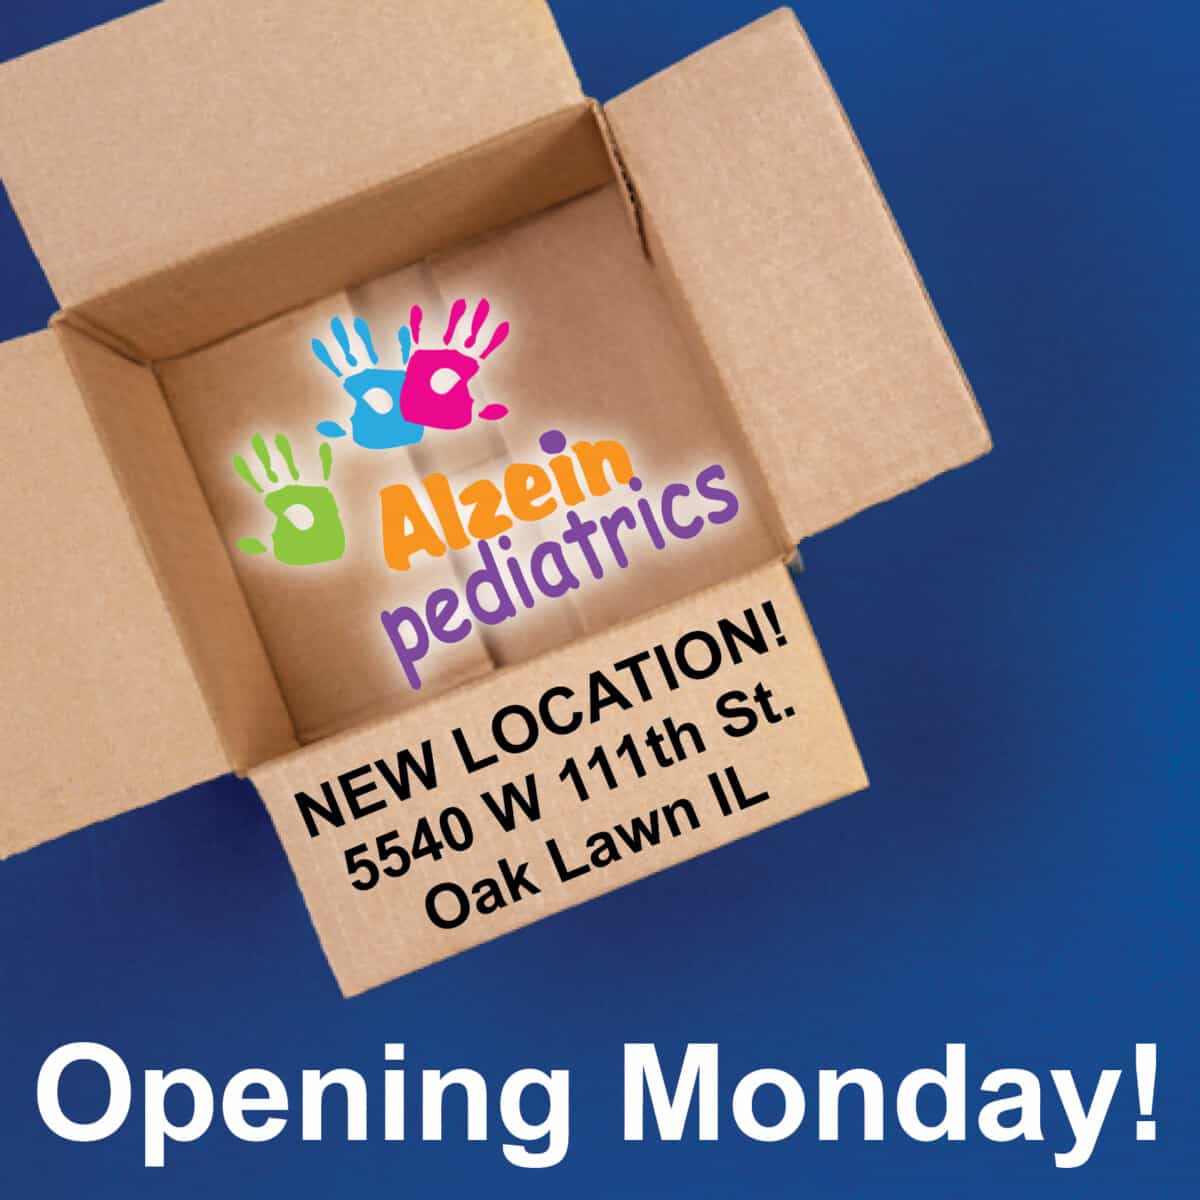 Alzein pediatrics is opening new location